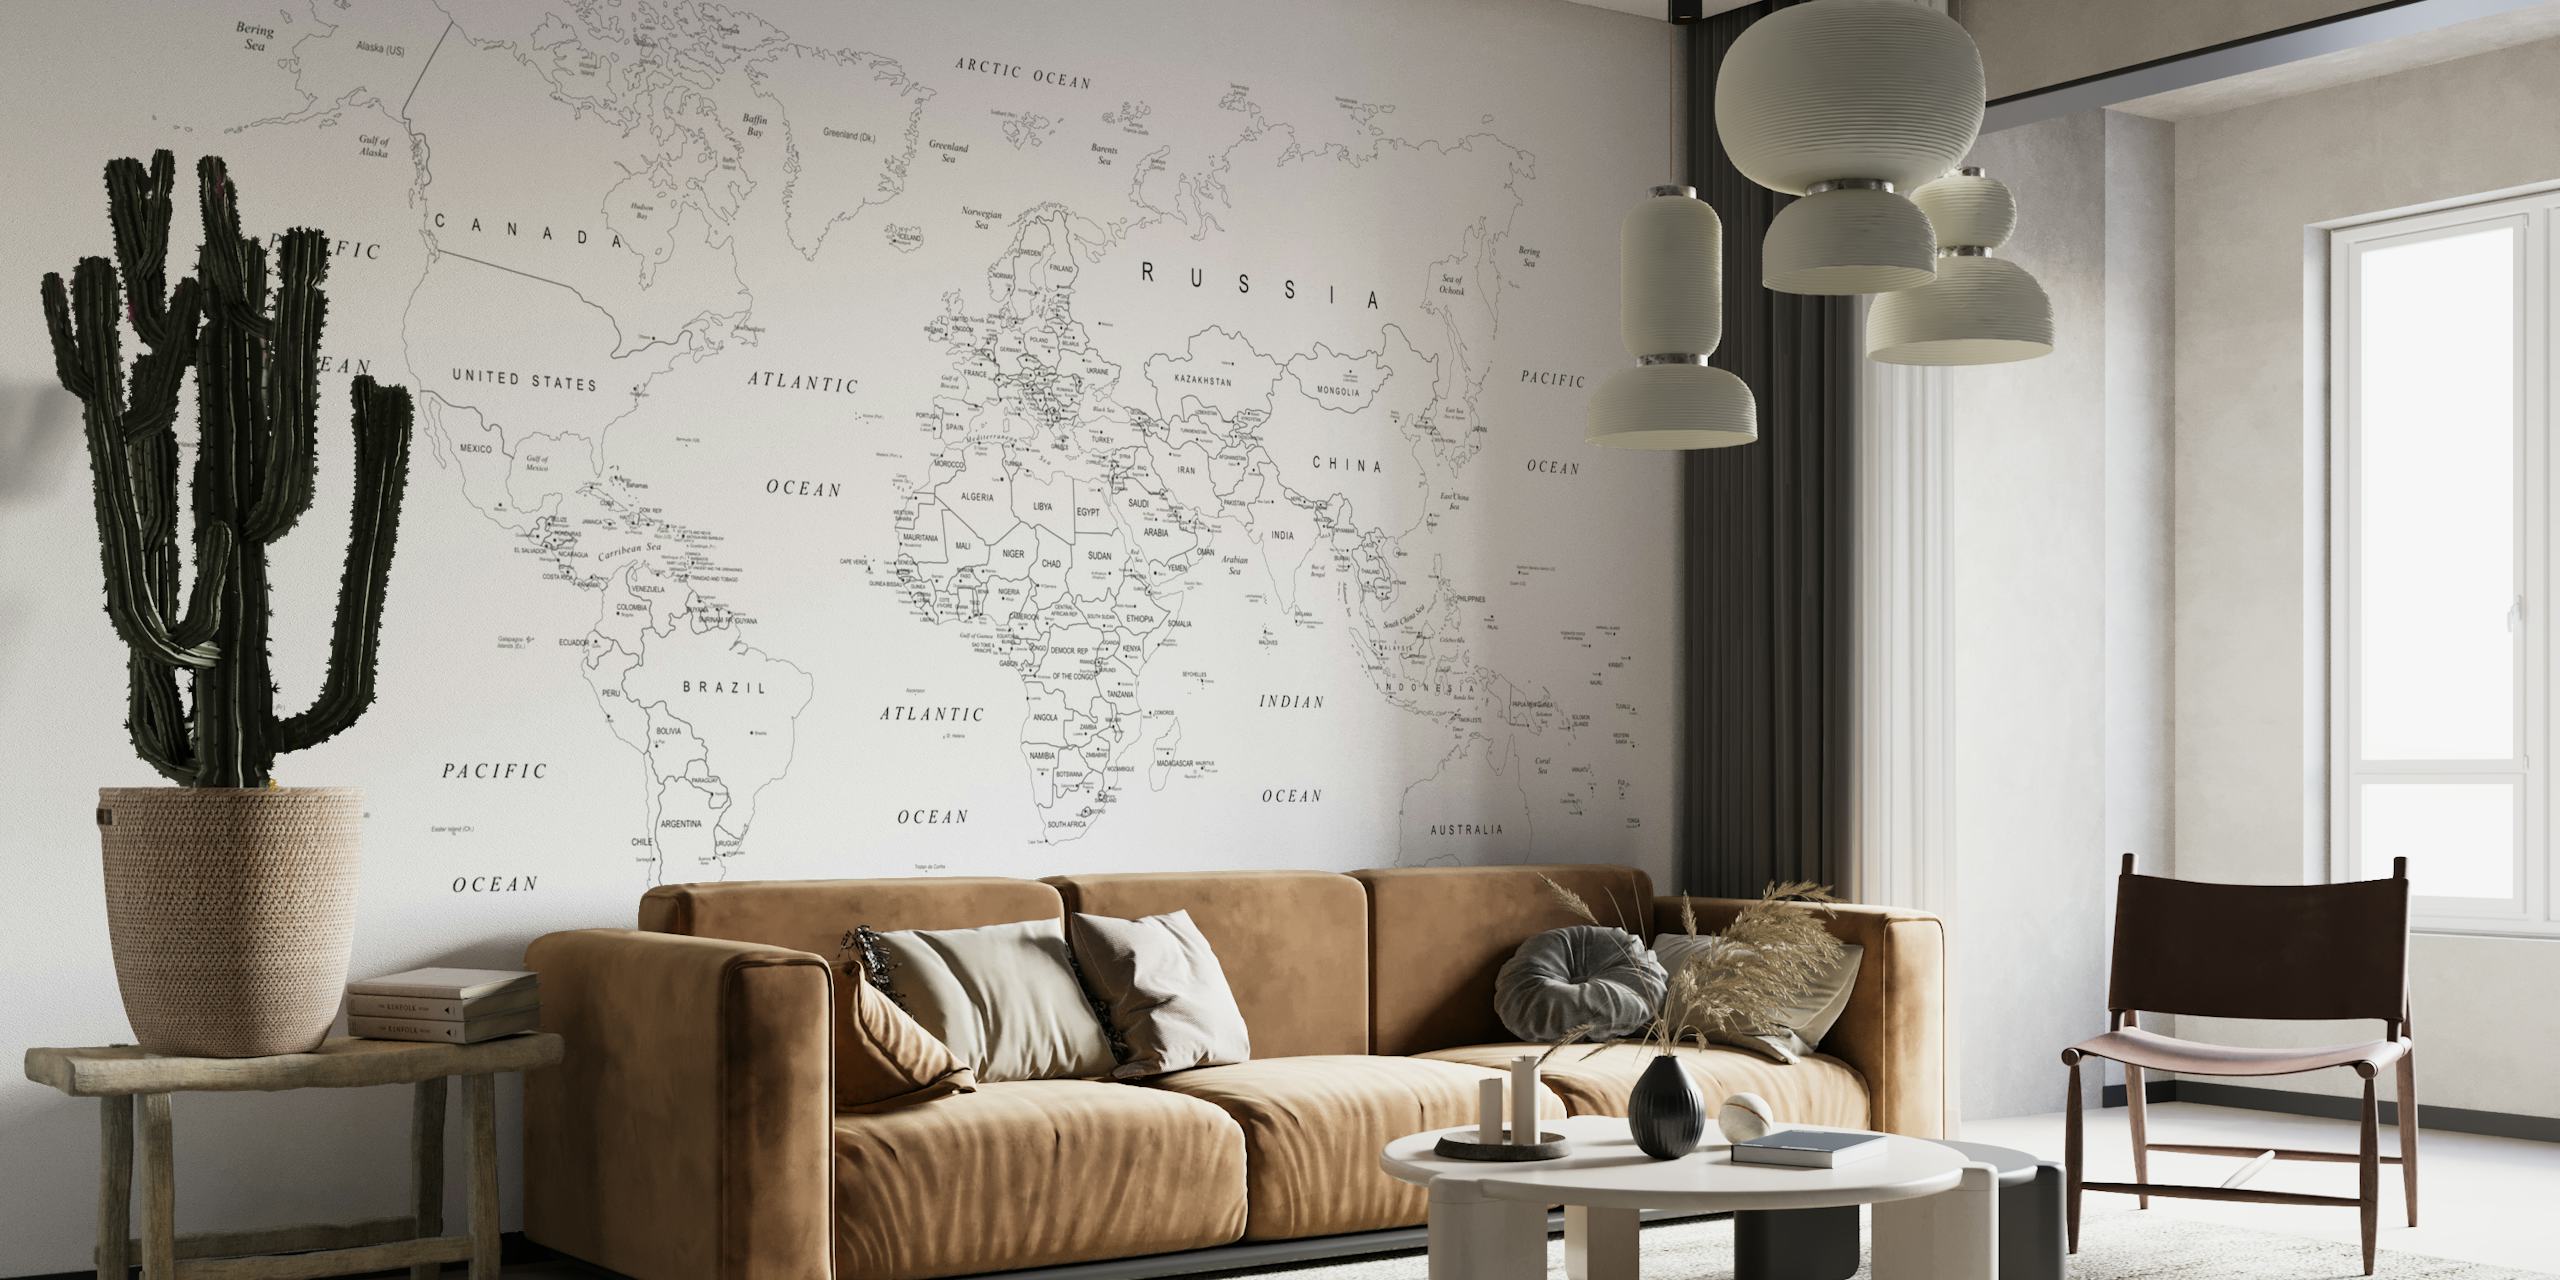 World Map Black Outlines papel pintado